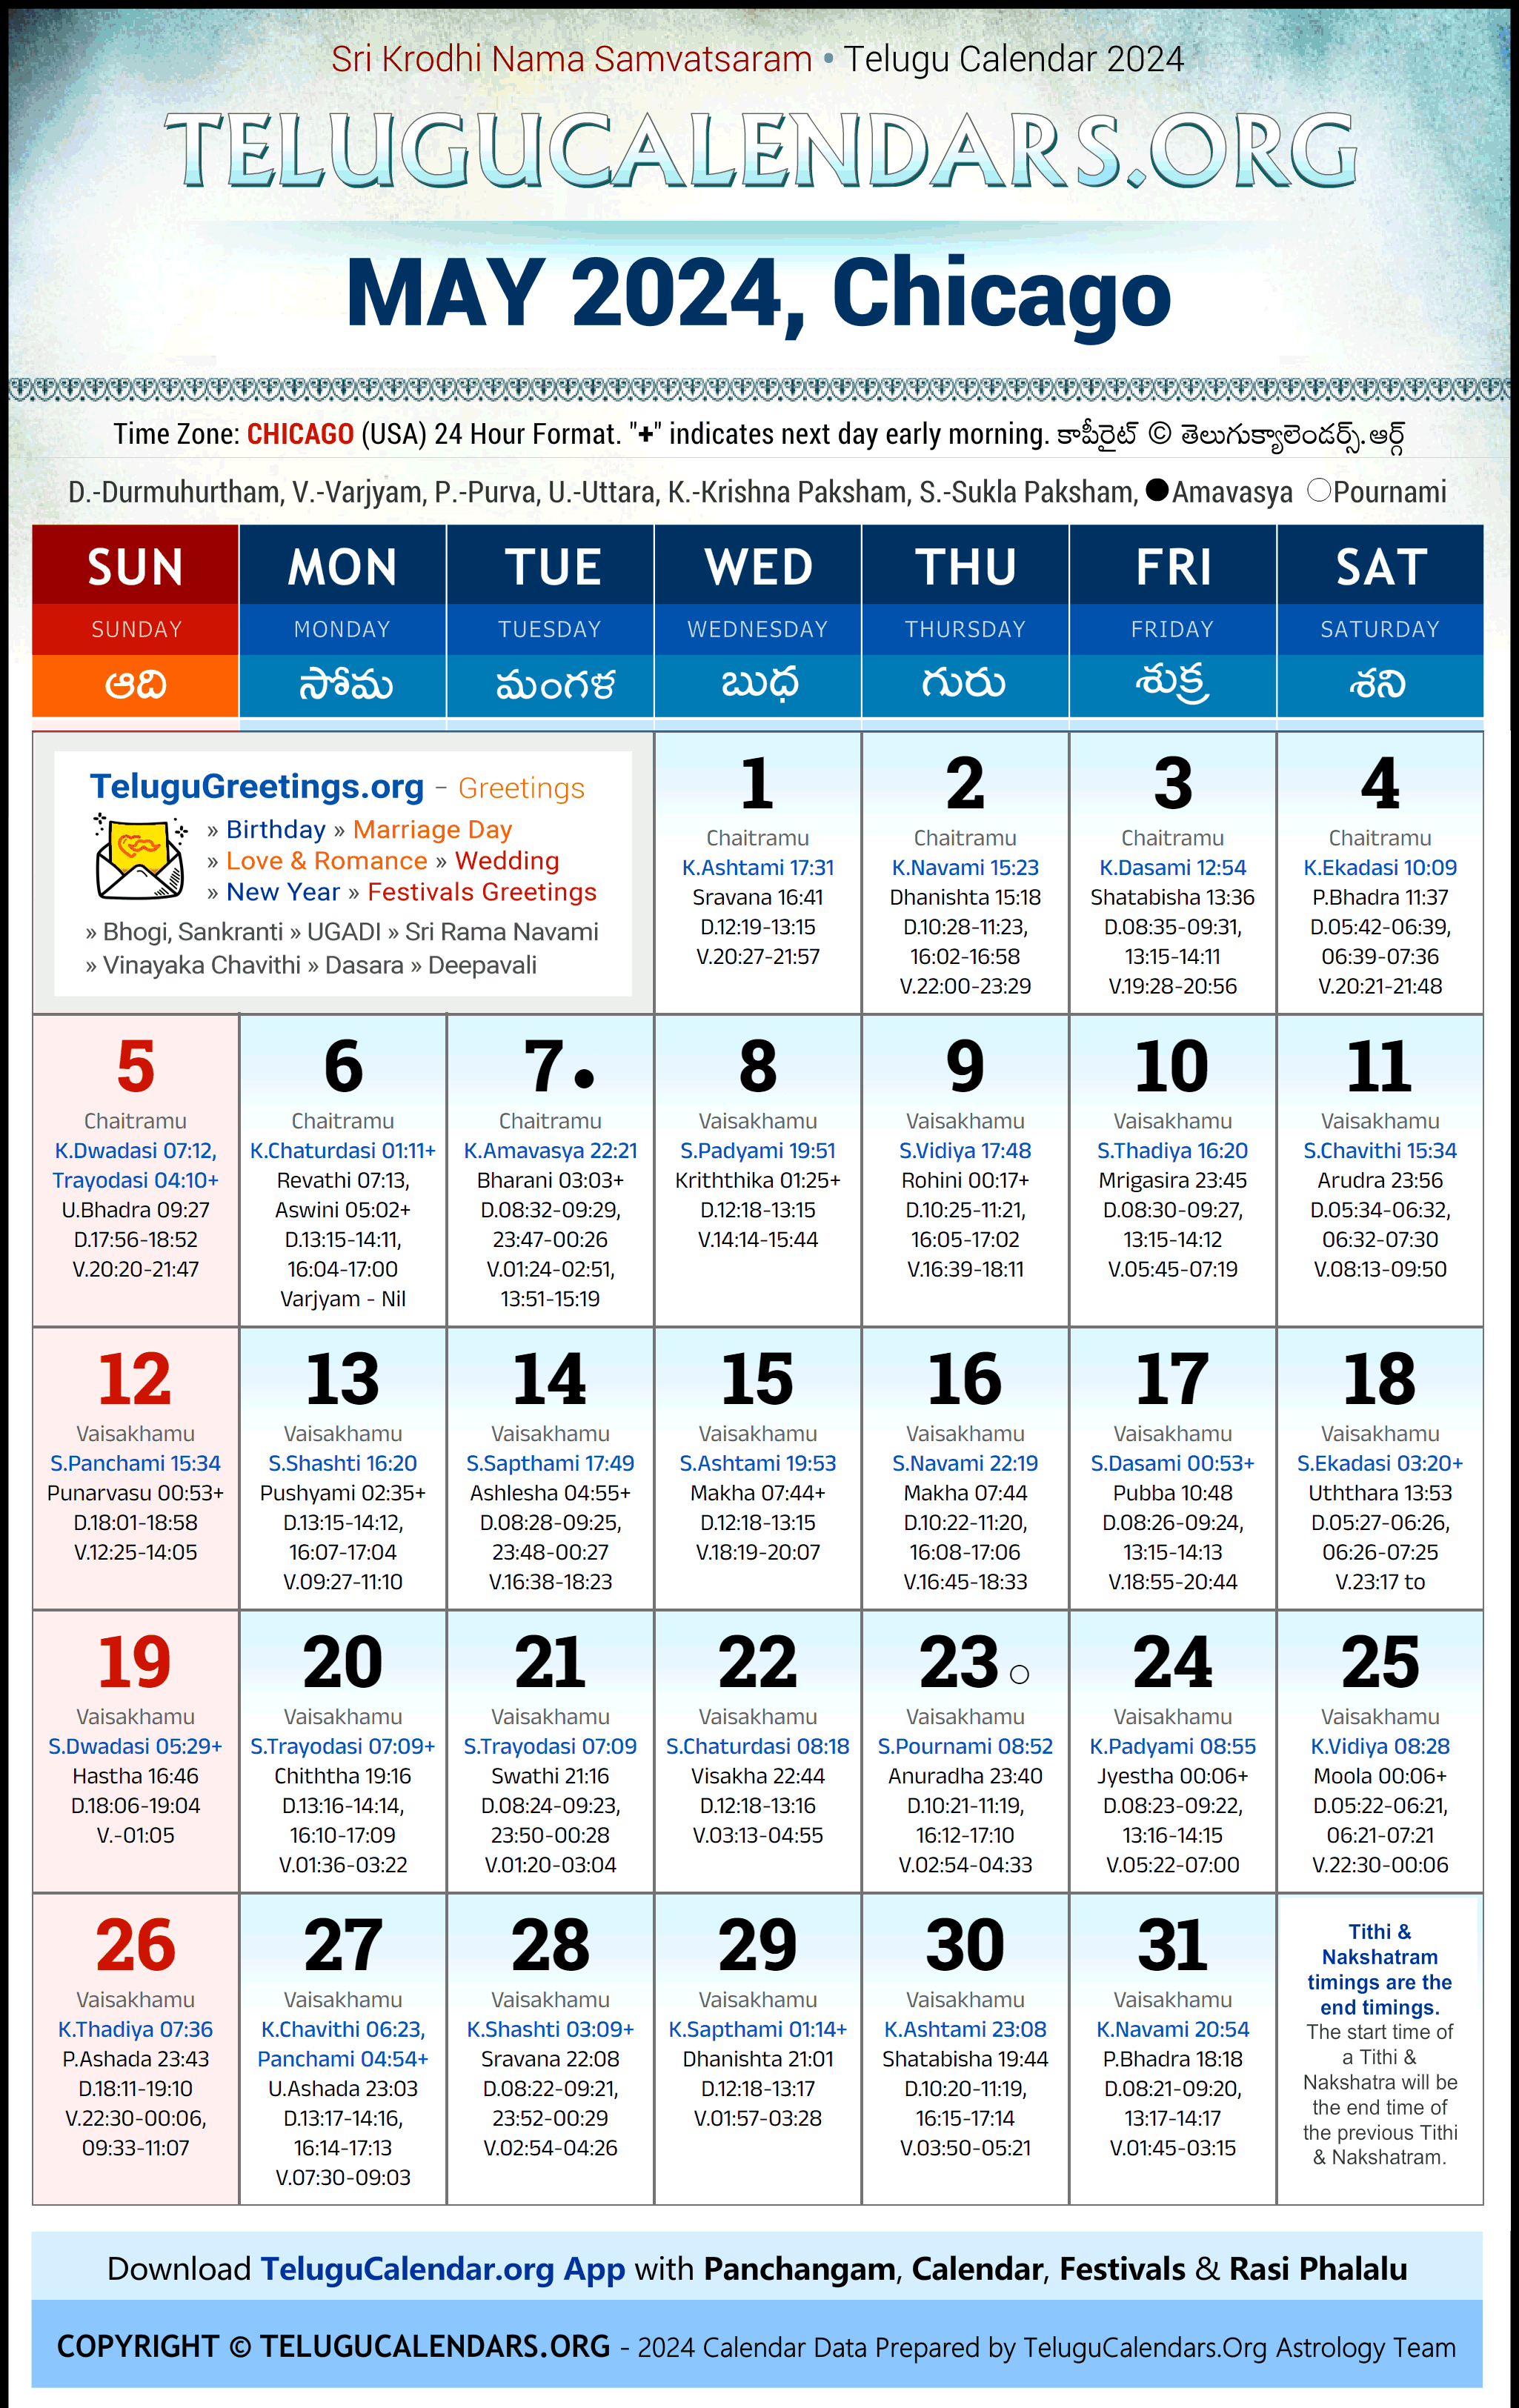 Telugu Calendar 2024 May Festivals for Chicago